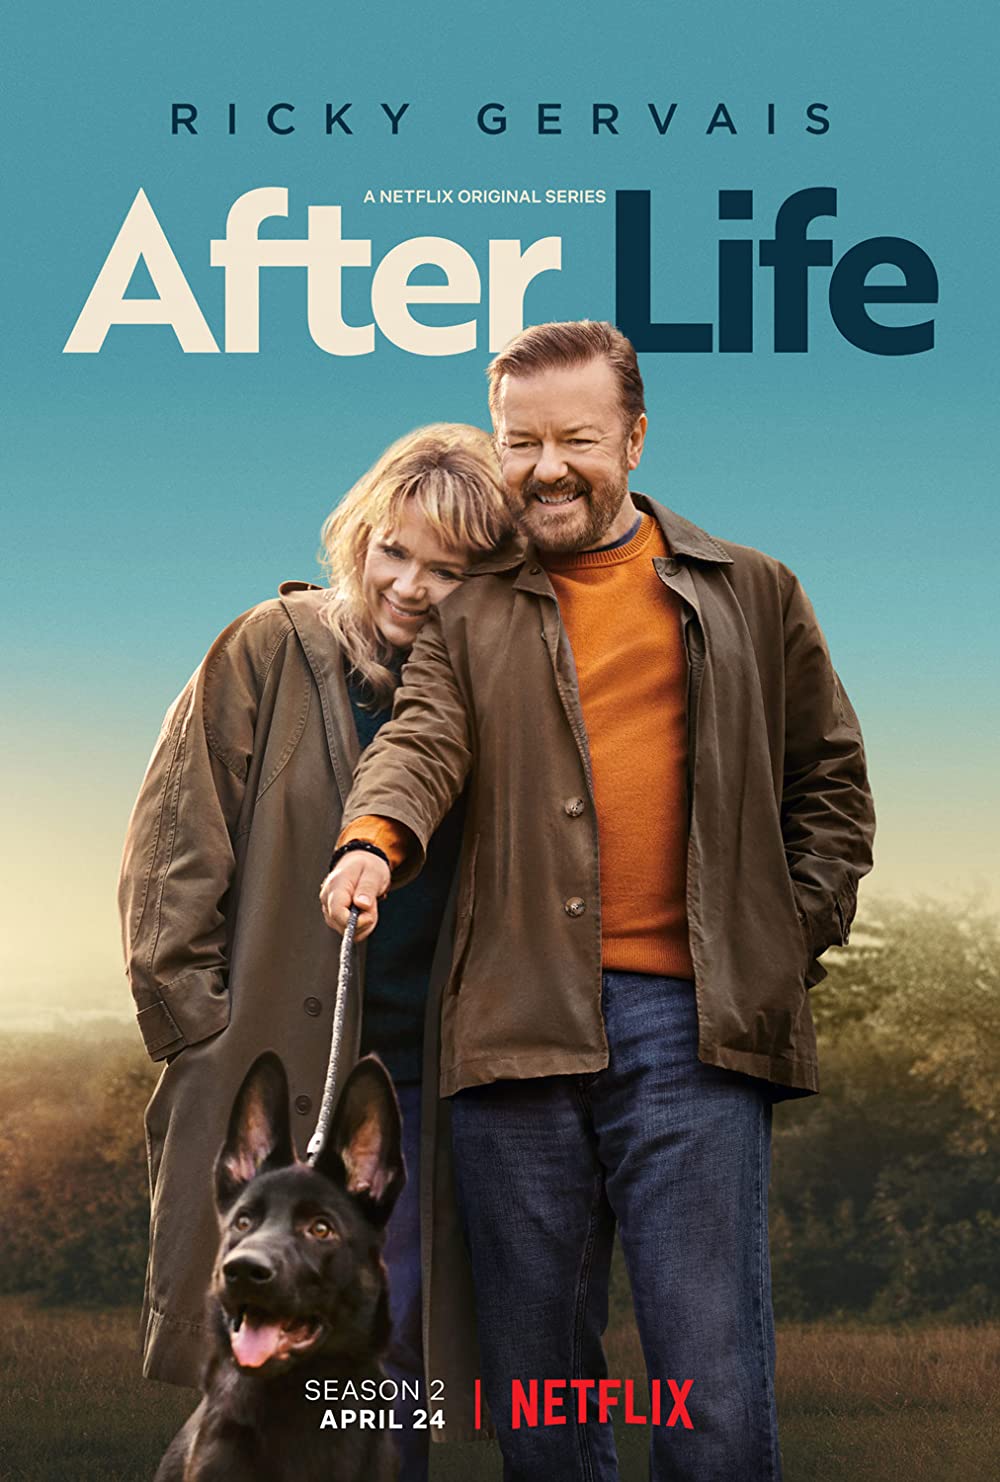 After Life on Netflix (Pic credit: IMDb)